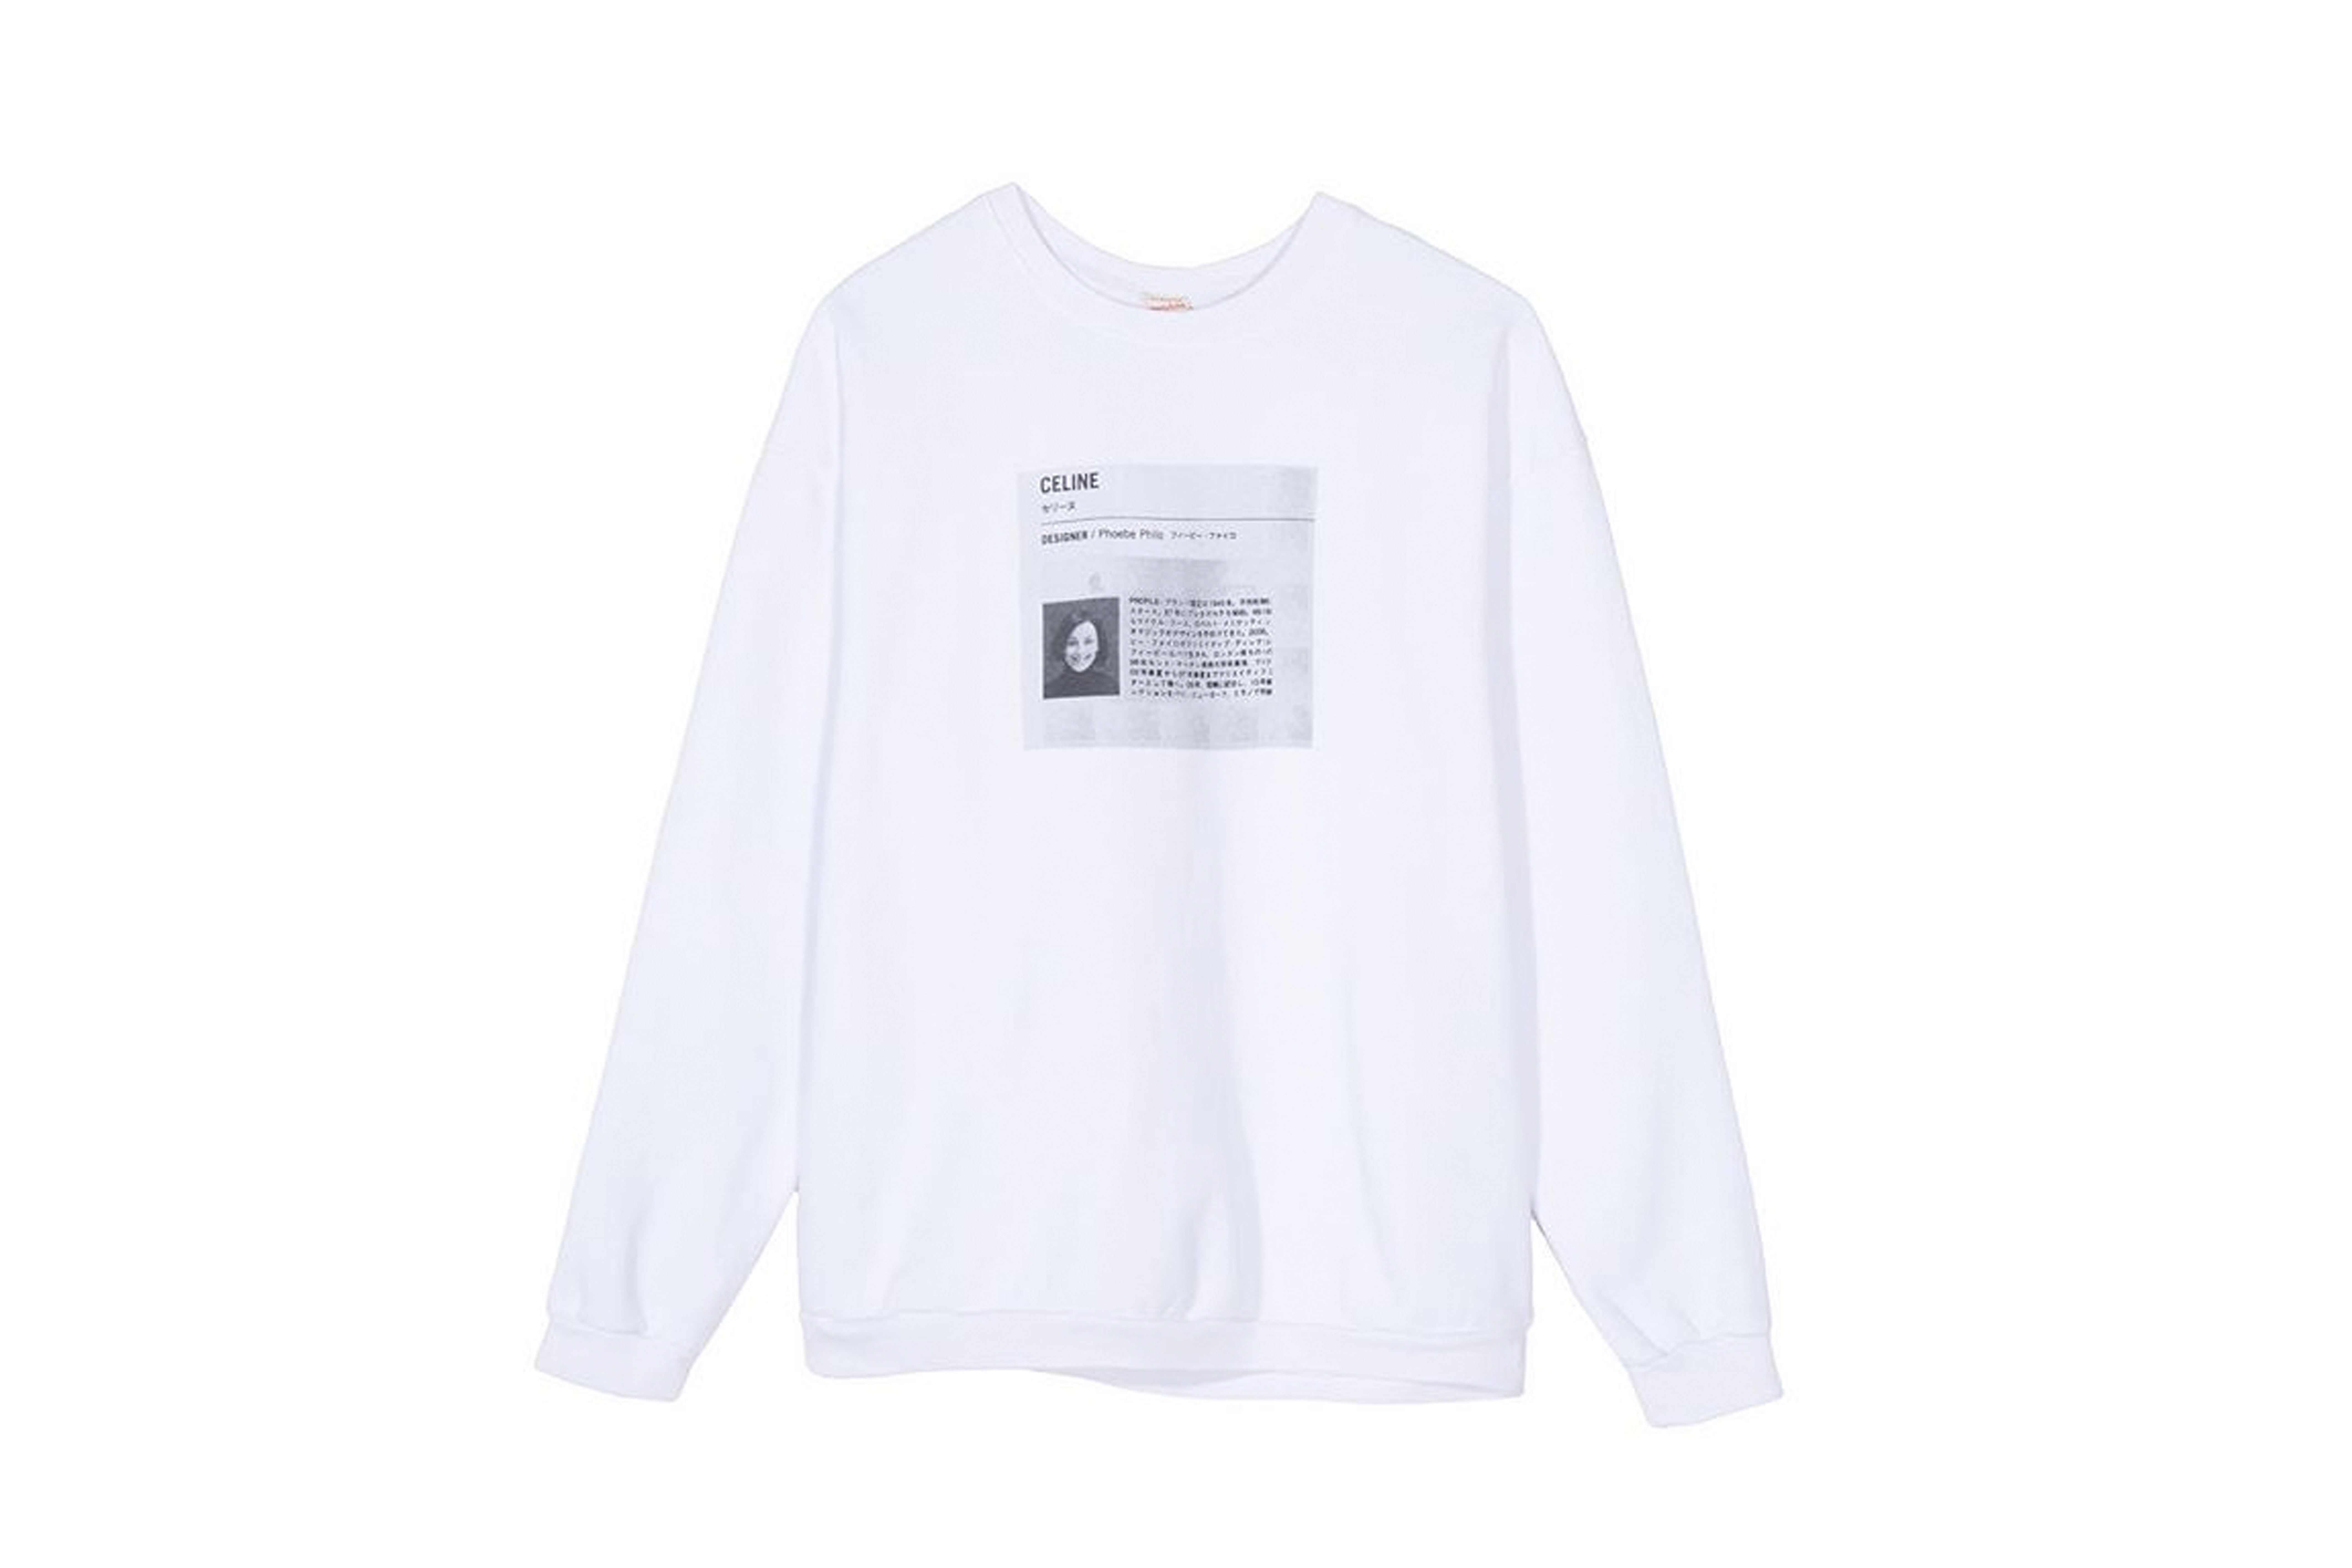 Sporty & Rich Celine Phoebe Philo Sweatshirt White Print Homage Restock